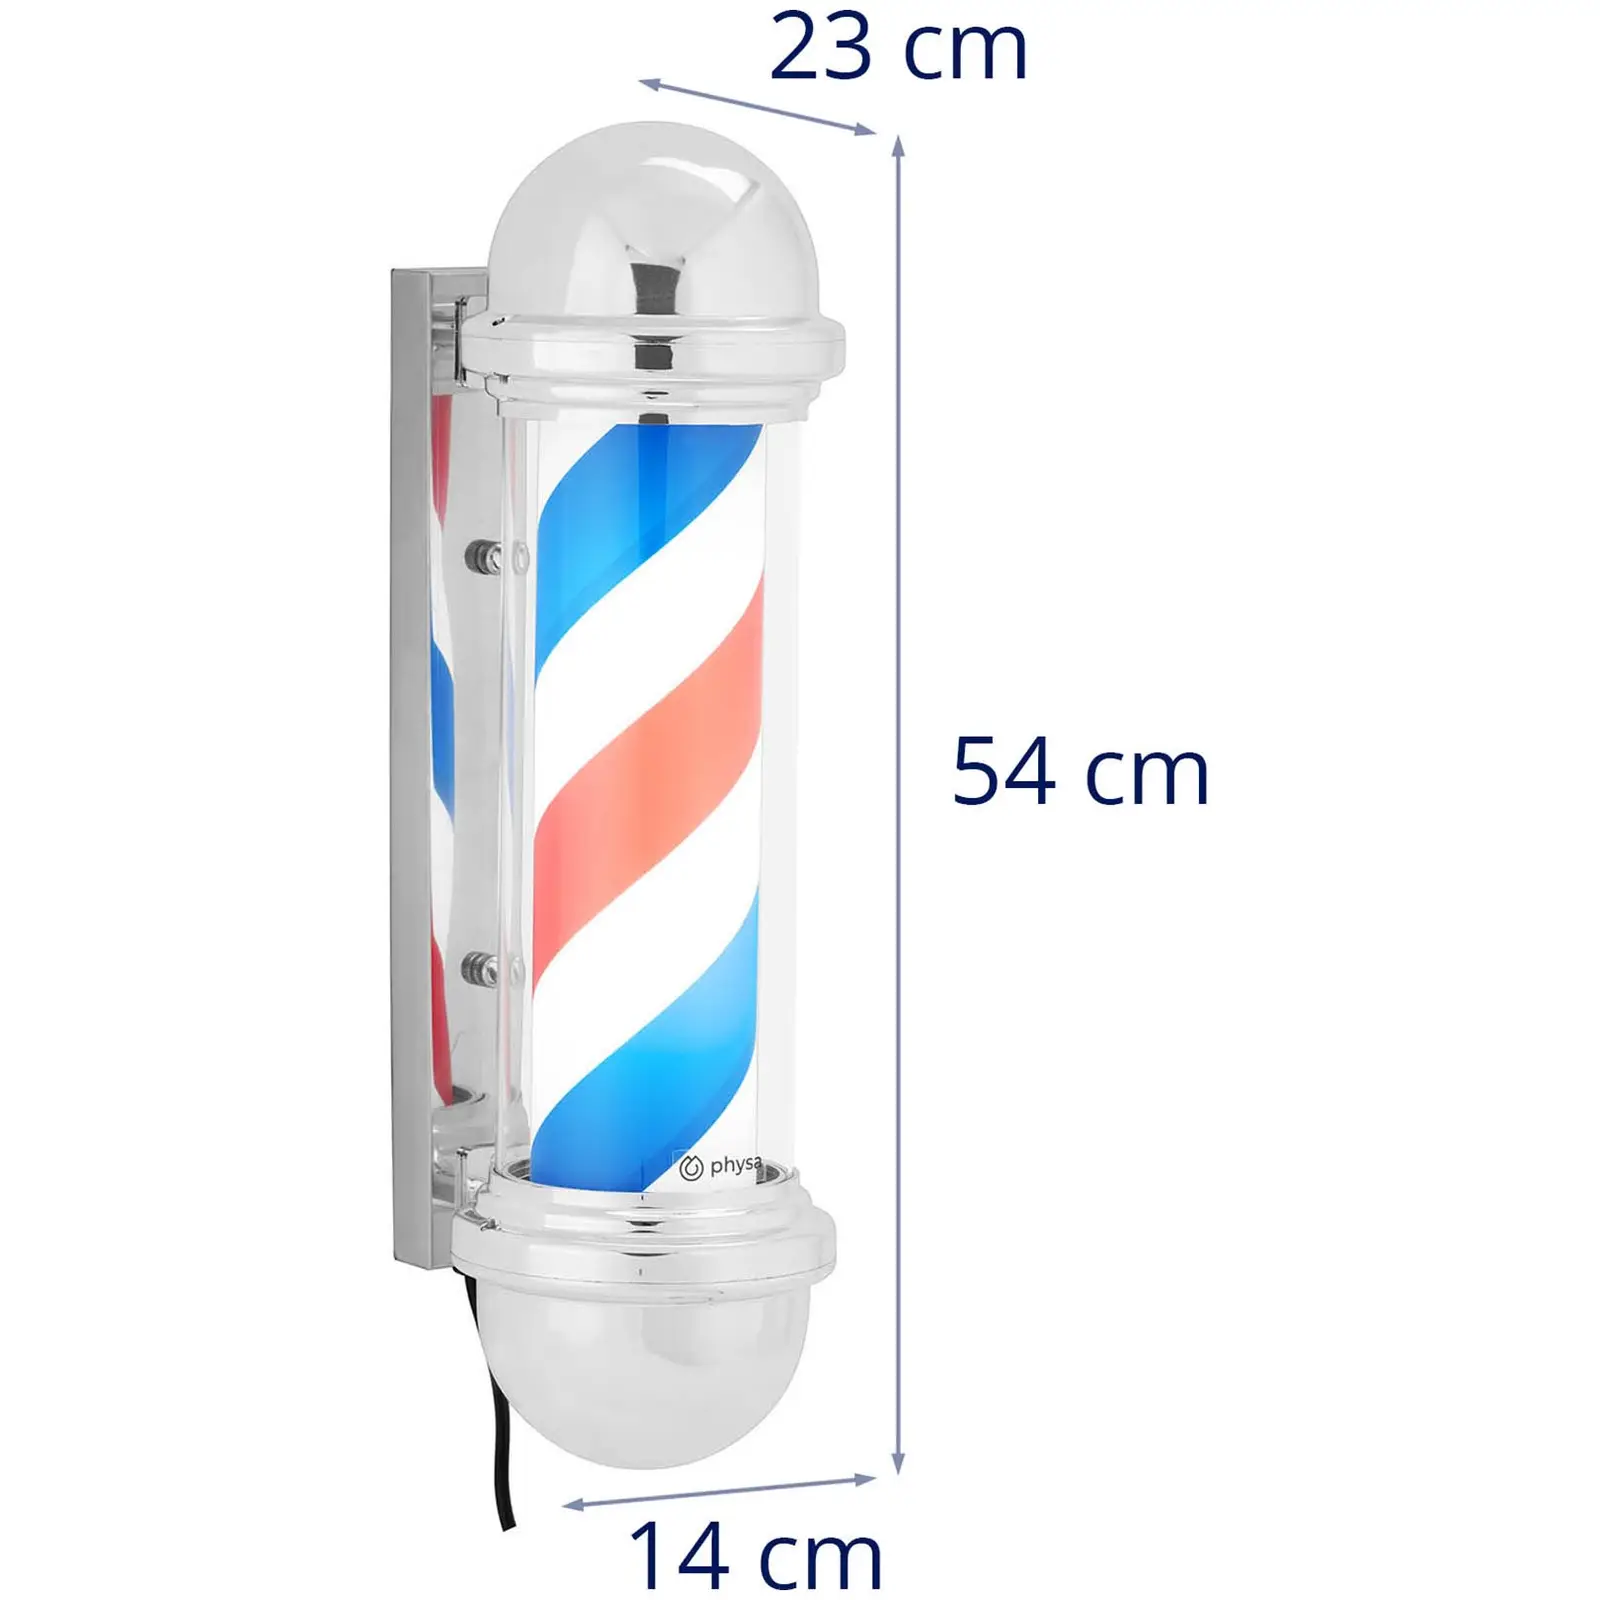 Barber Pole - rotierend und beleuchtet - 300 mm Höhe - 22 cm Wandabstand - silberne Fassung